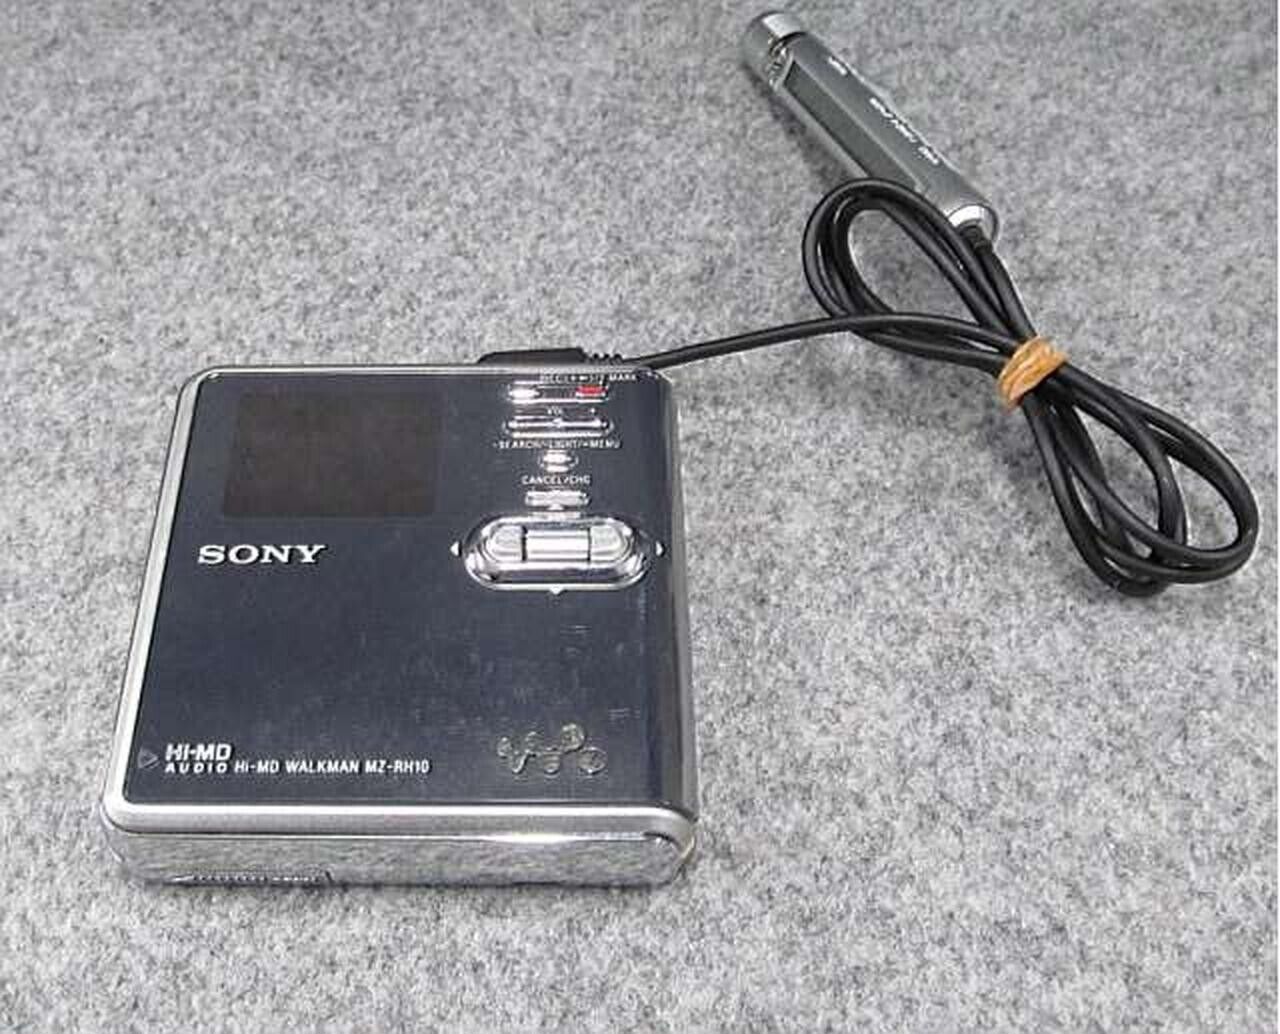 Sony Mz-rh10 Hi-md Walkman Walkman Portable Player Used